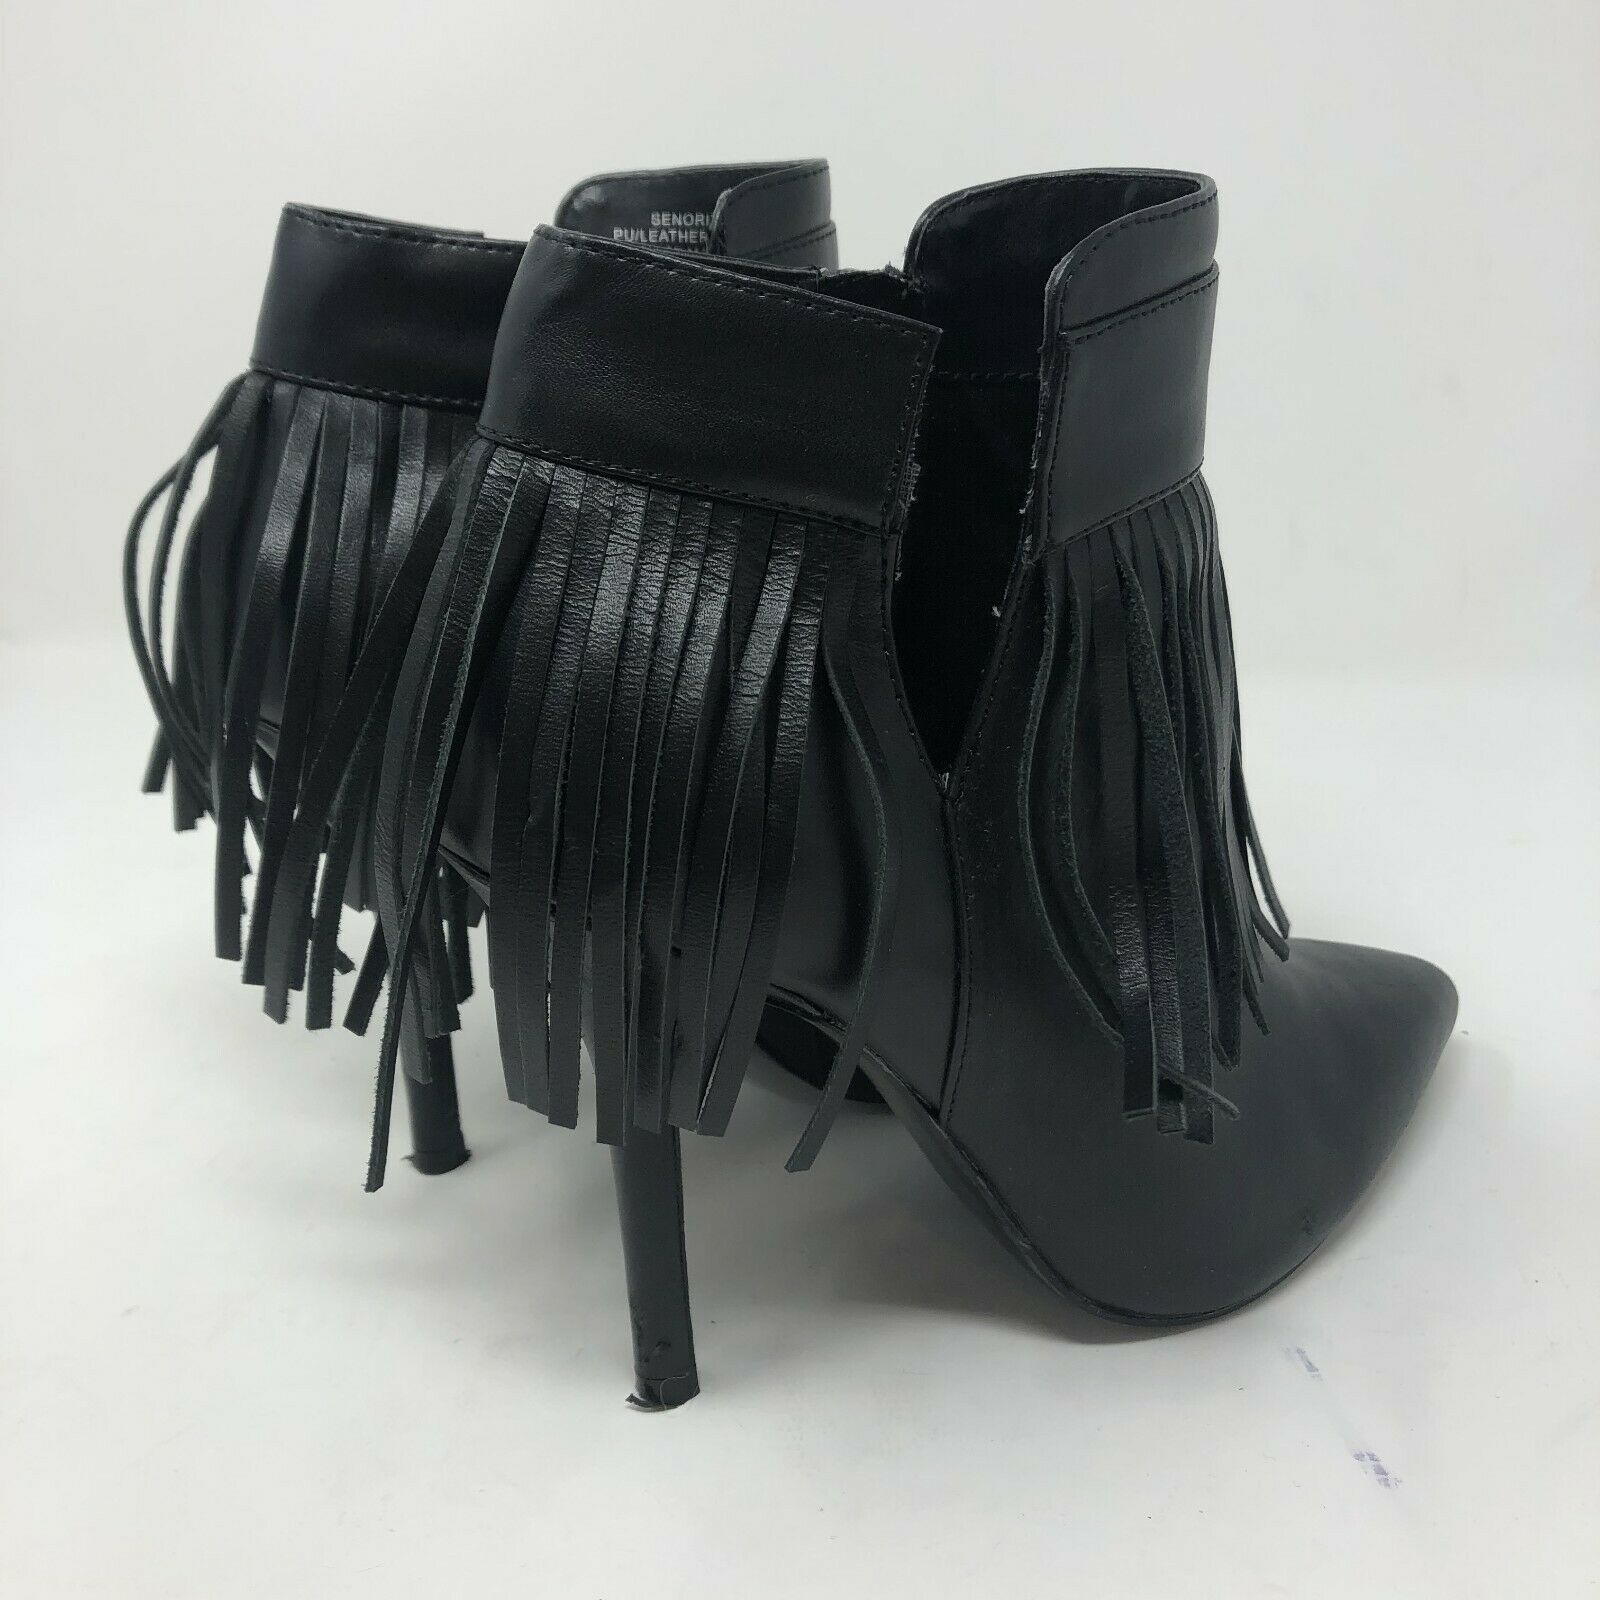 Boston Proper Booties Boots Tassle Fringe Heels Black Leather Women 6.5 ...